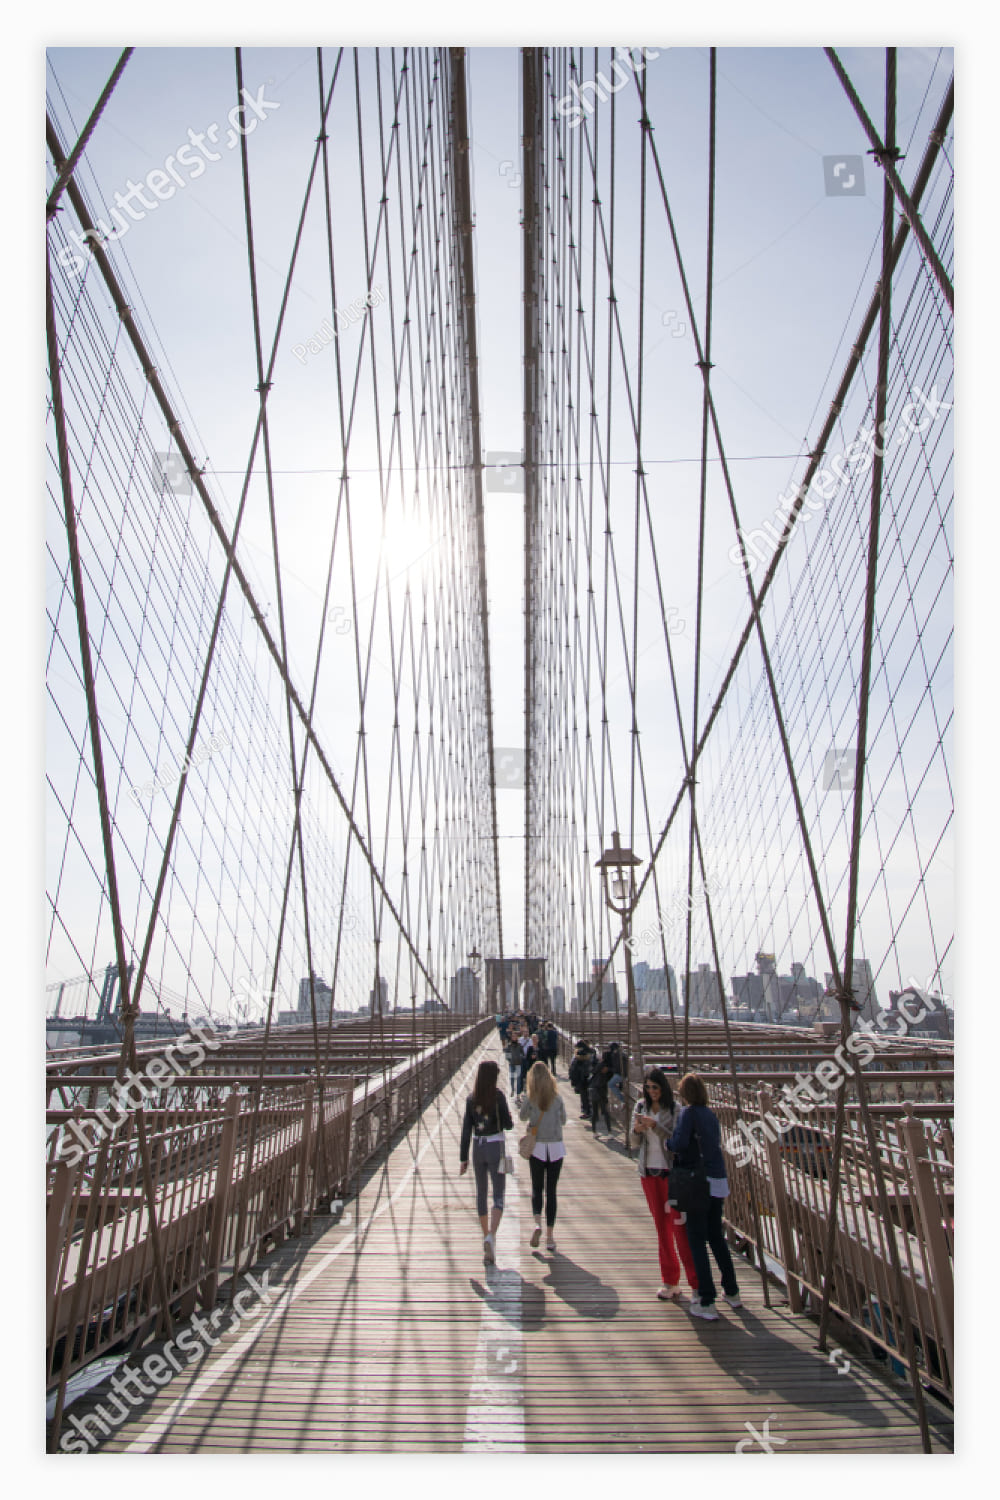 he Brooklyn Bridge connects Manhattan Island to Downtown Brooklyn.